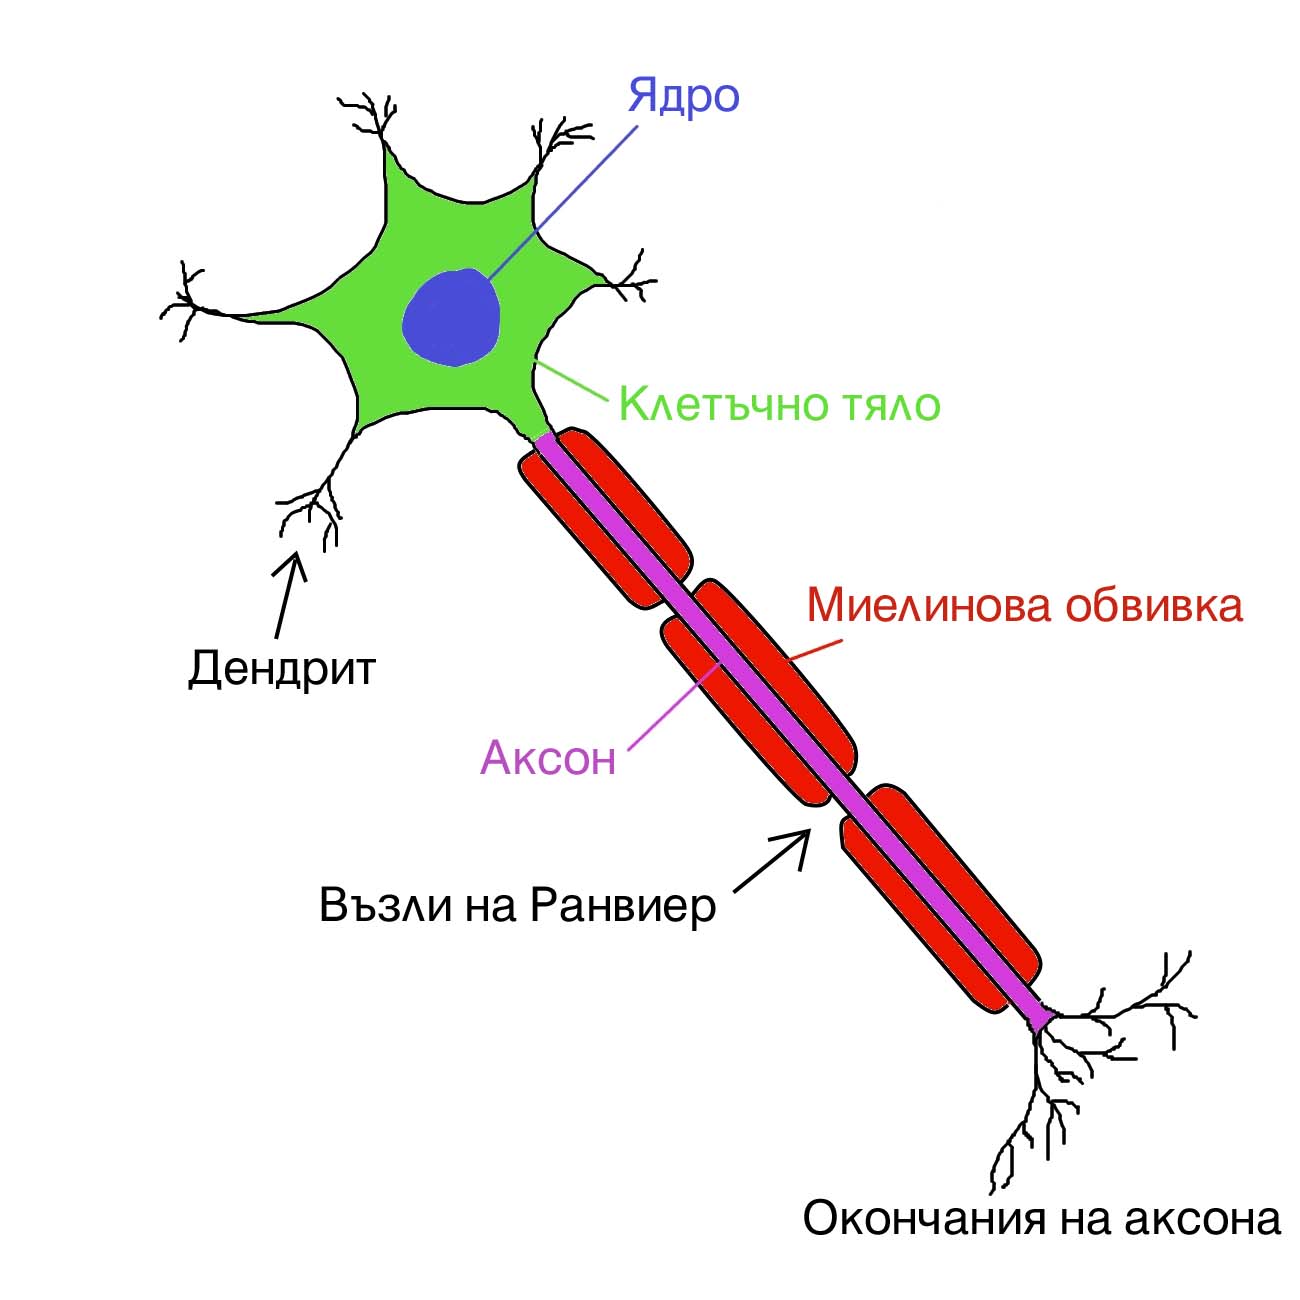 labelled diagram of motor neuron